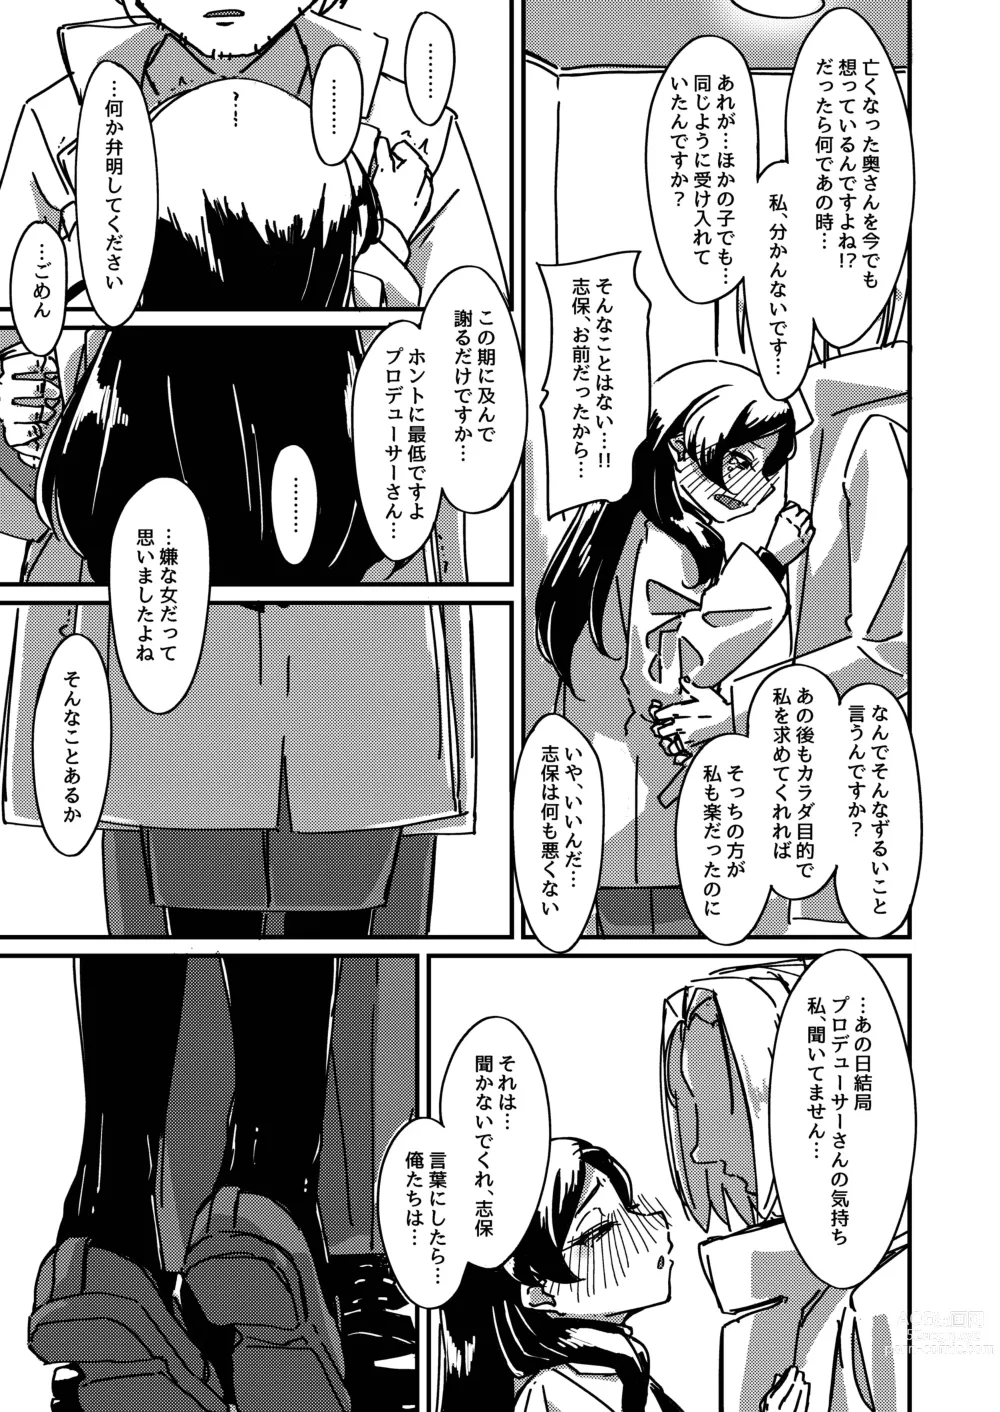 Page 12 of doujinshi Kuroneko no Kyouji + Aruhi no Kuro Usagi